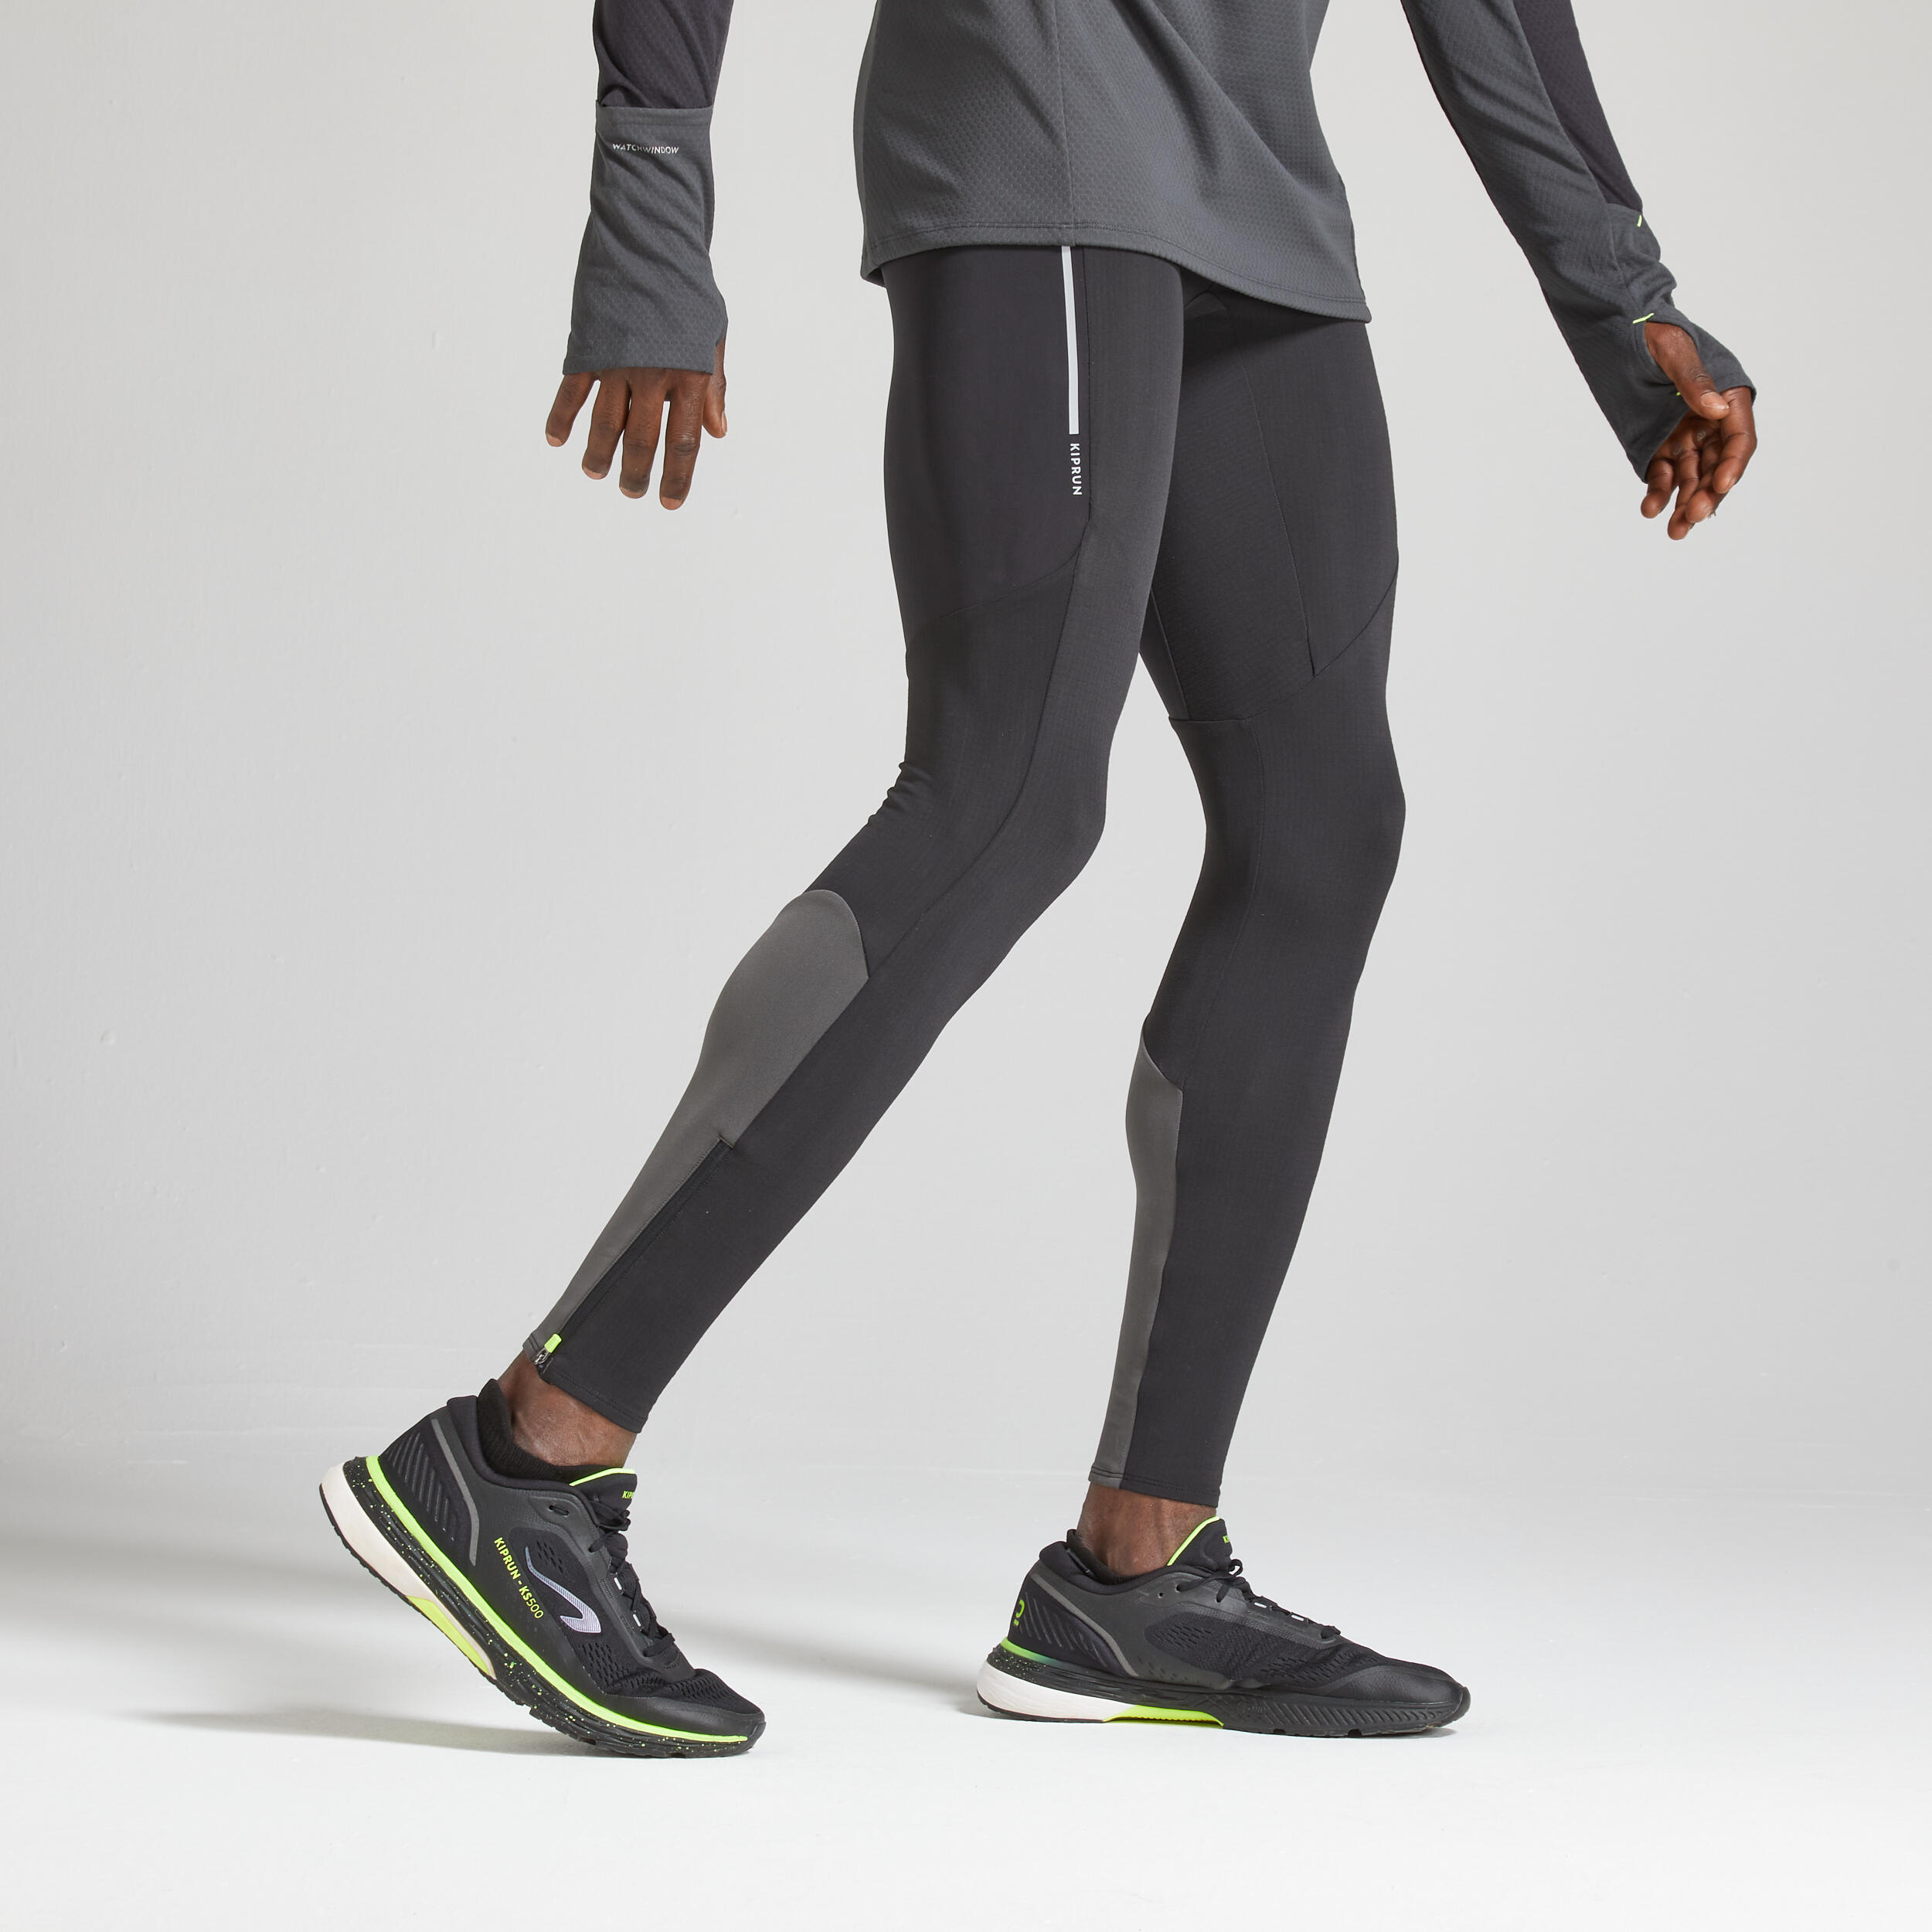 Men 3/4 Compression Tights Quick Dry Sport Running Legging for Fitness  Sports Jogging Running (Black Gray, 2XL) 